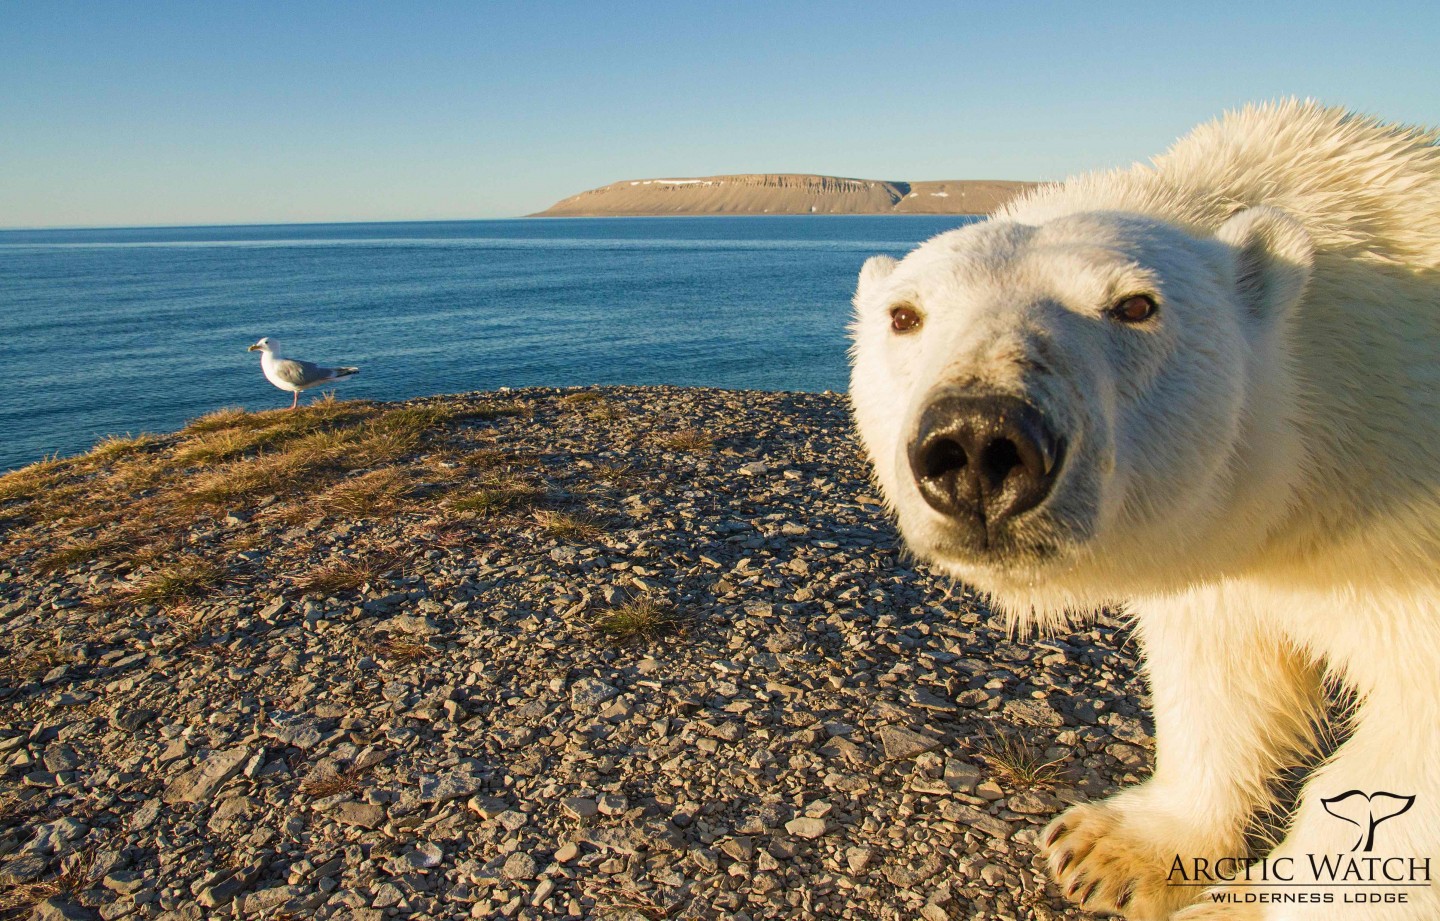 A polar bear spotted near Arctic Watch Wilderness Lodge